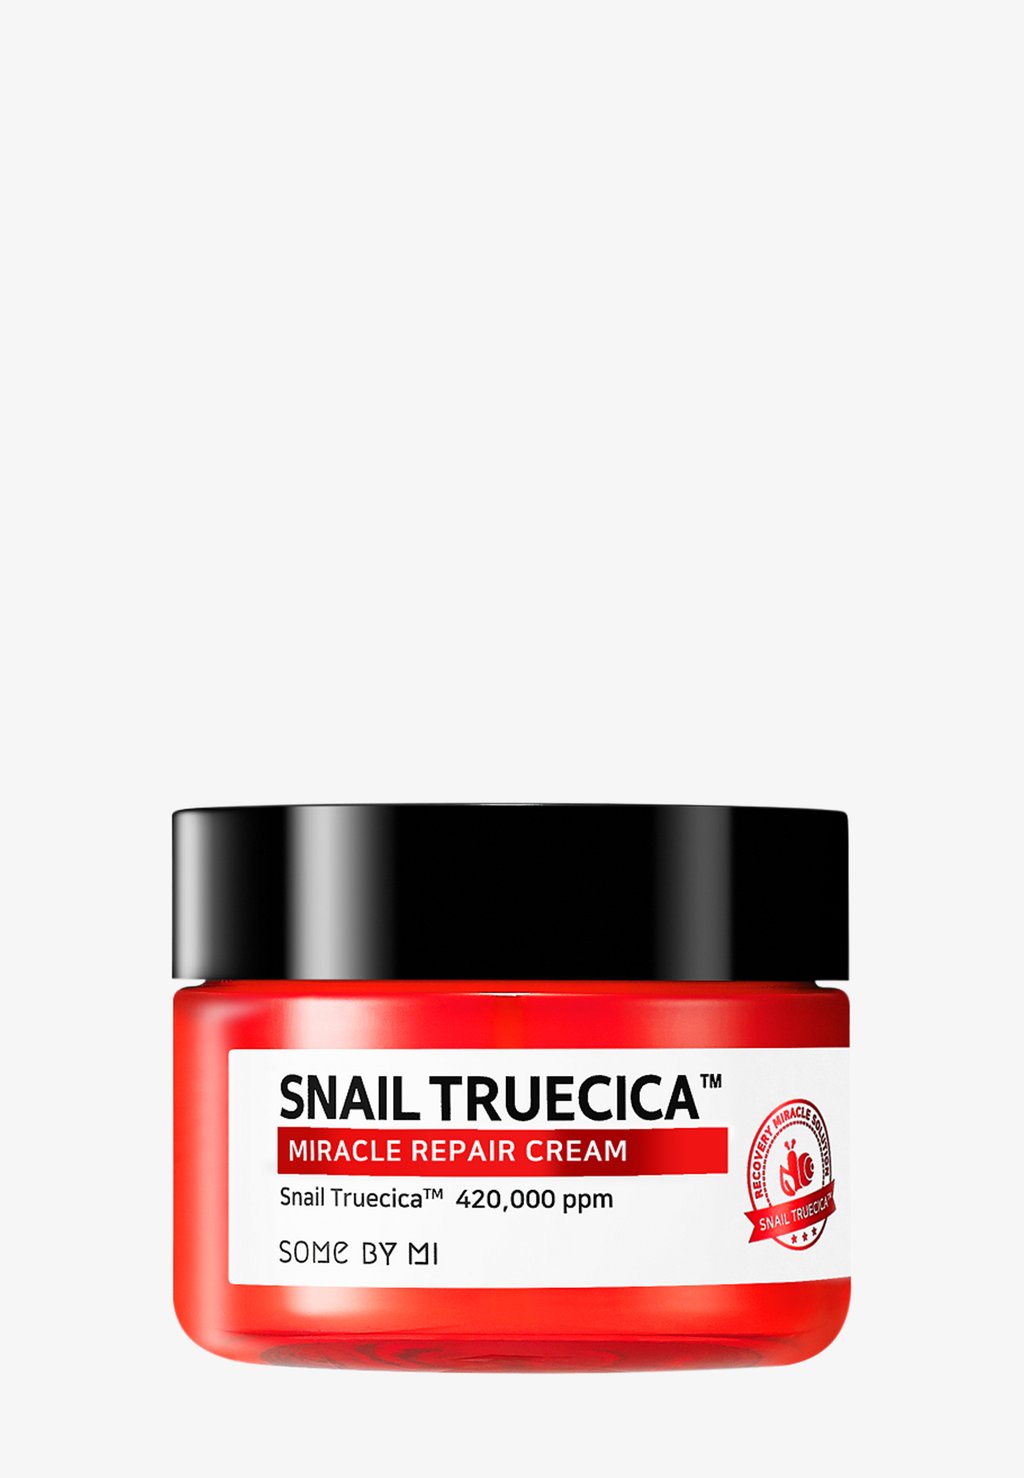 Дневной крем Snail Truecica Miracle Repair Cream SOME BY MI